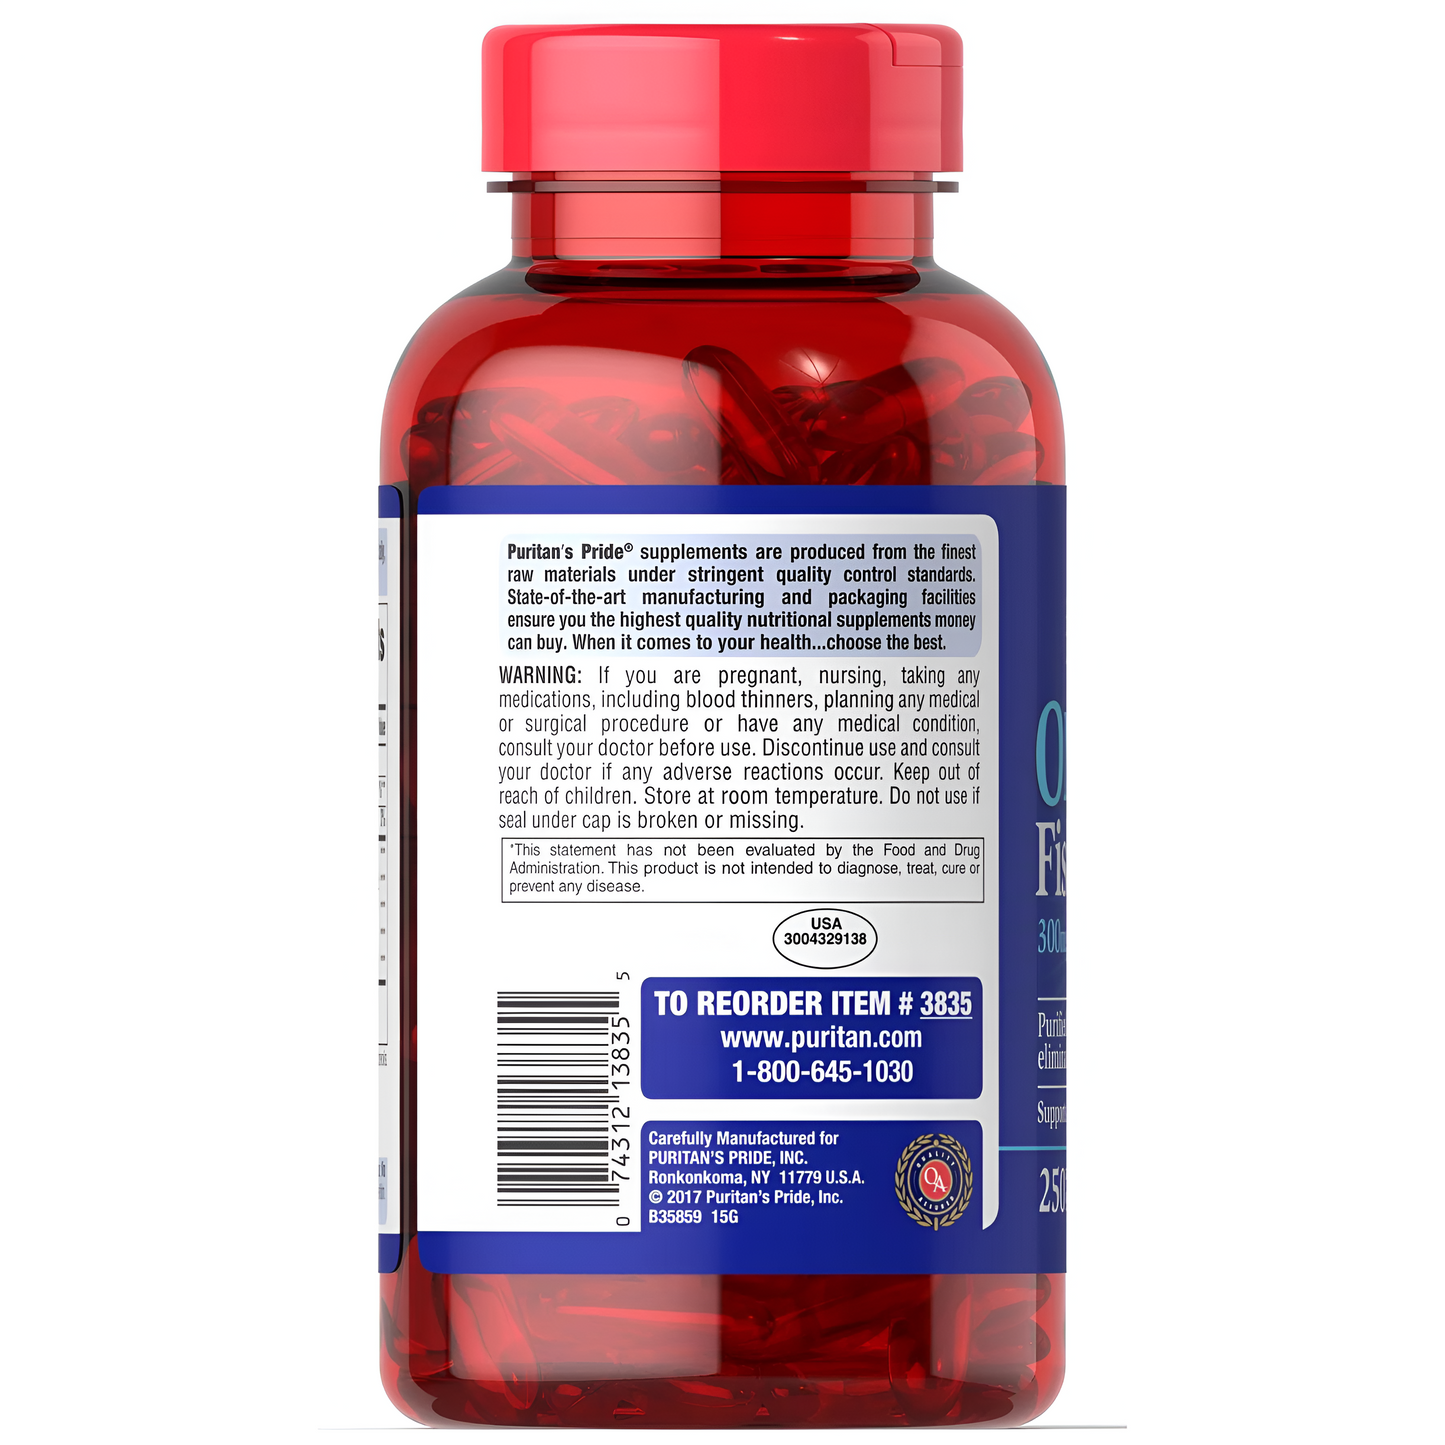 Omega-3  Fish Oil 1000mg- Active Omega 3 - 300 mg Puritan's Pride 250 Capsulas de Gel